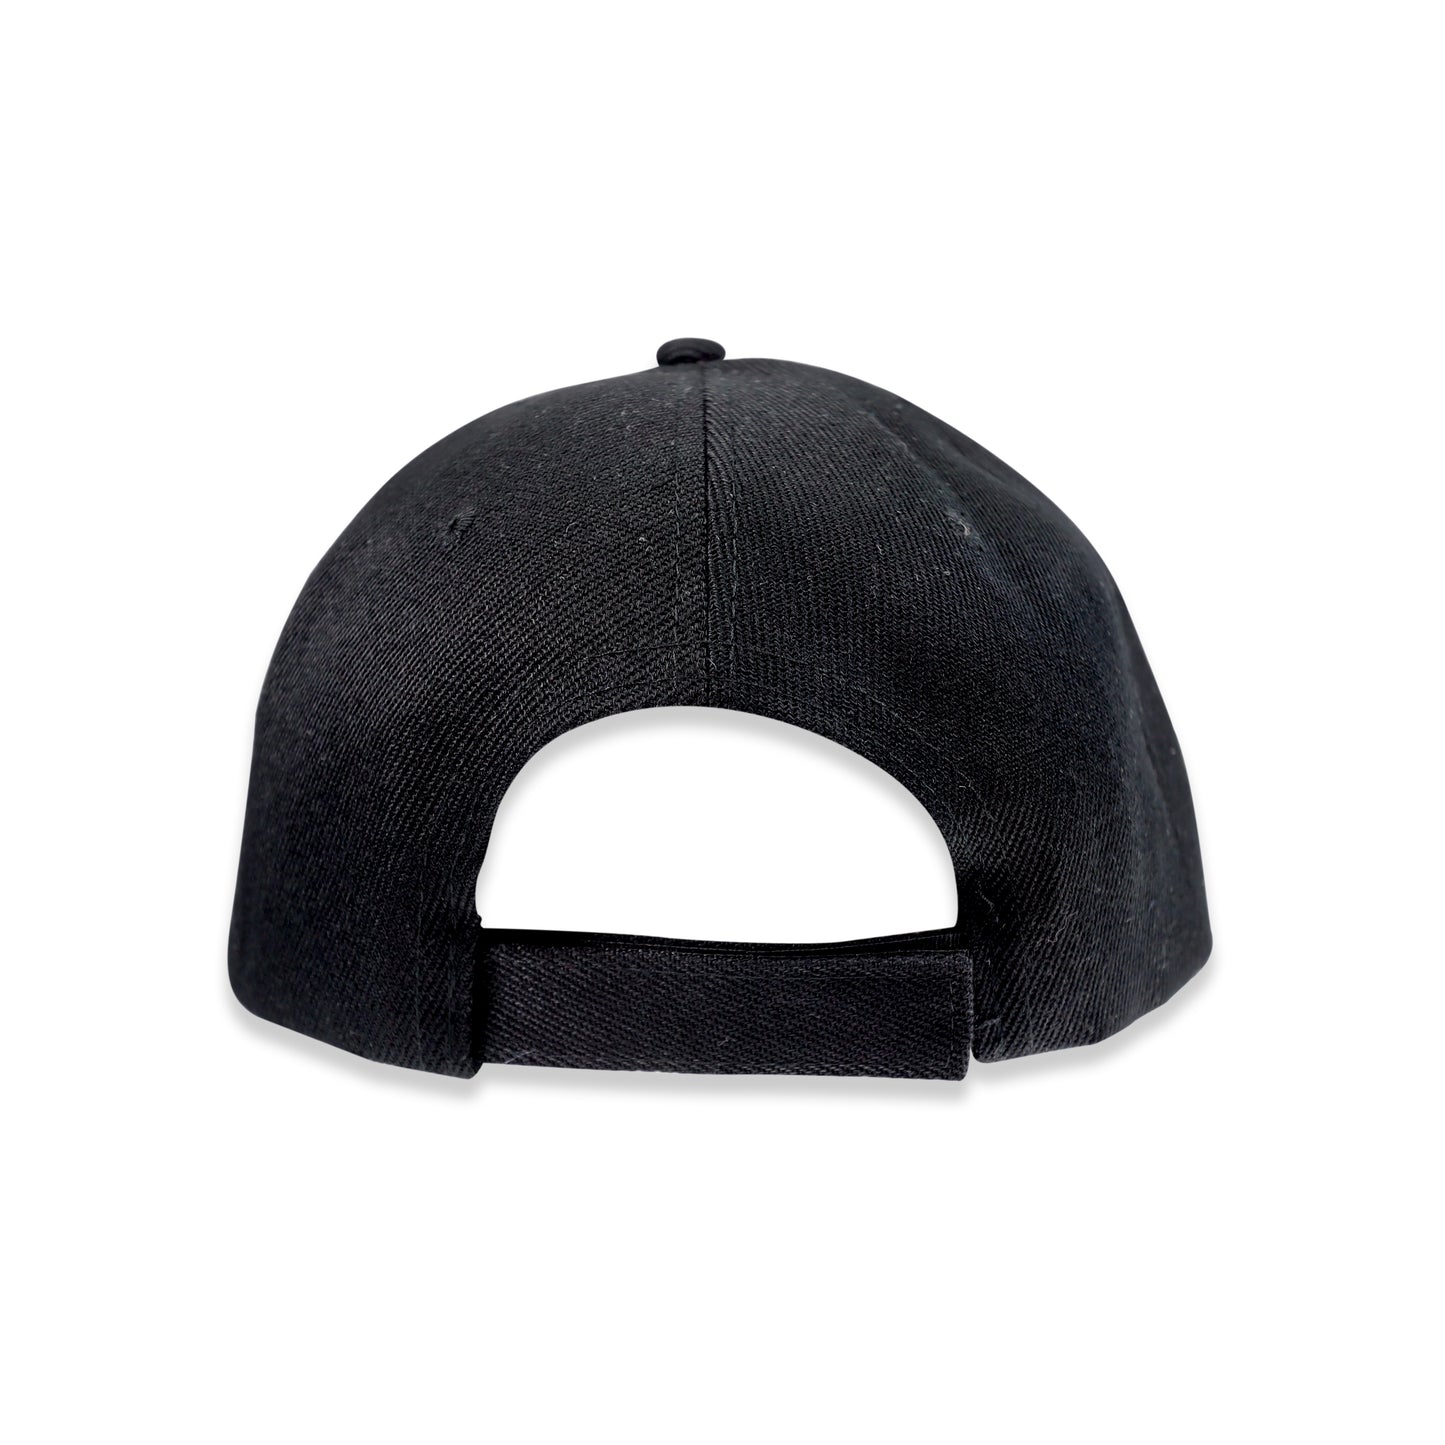 ImportWorx Black Checkered Embroidered Veclro Strap Hat